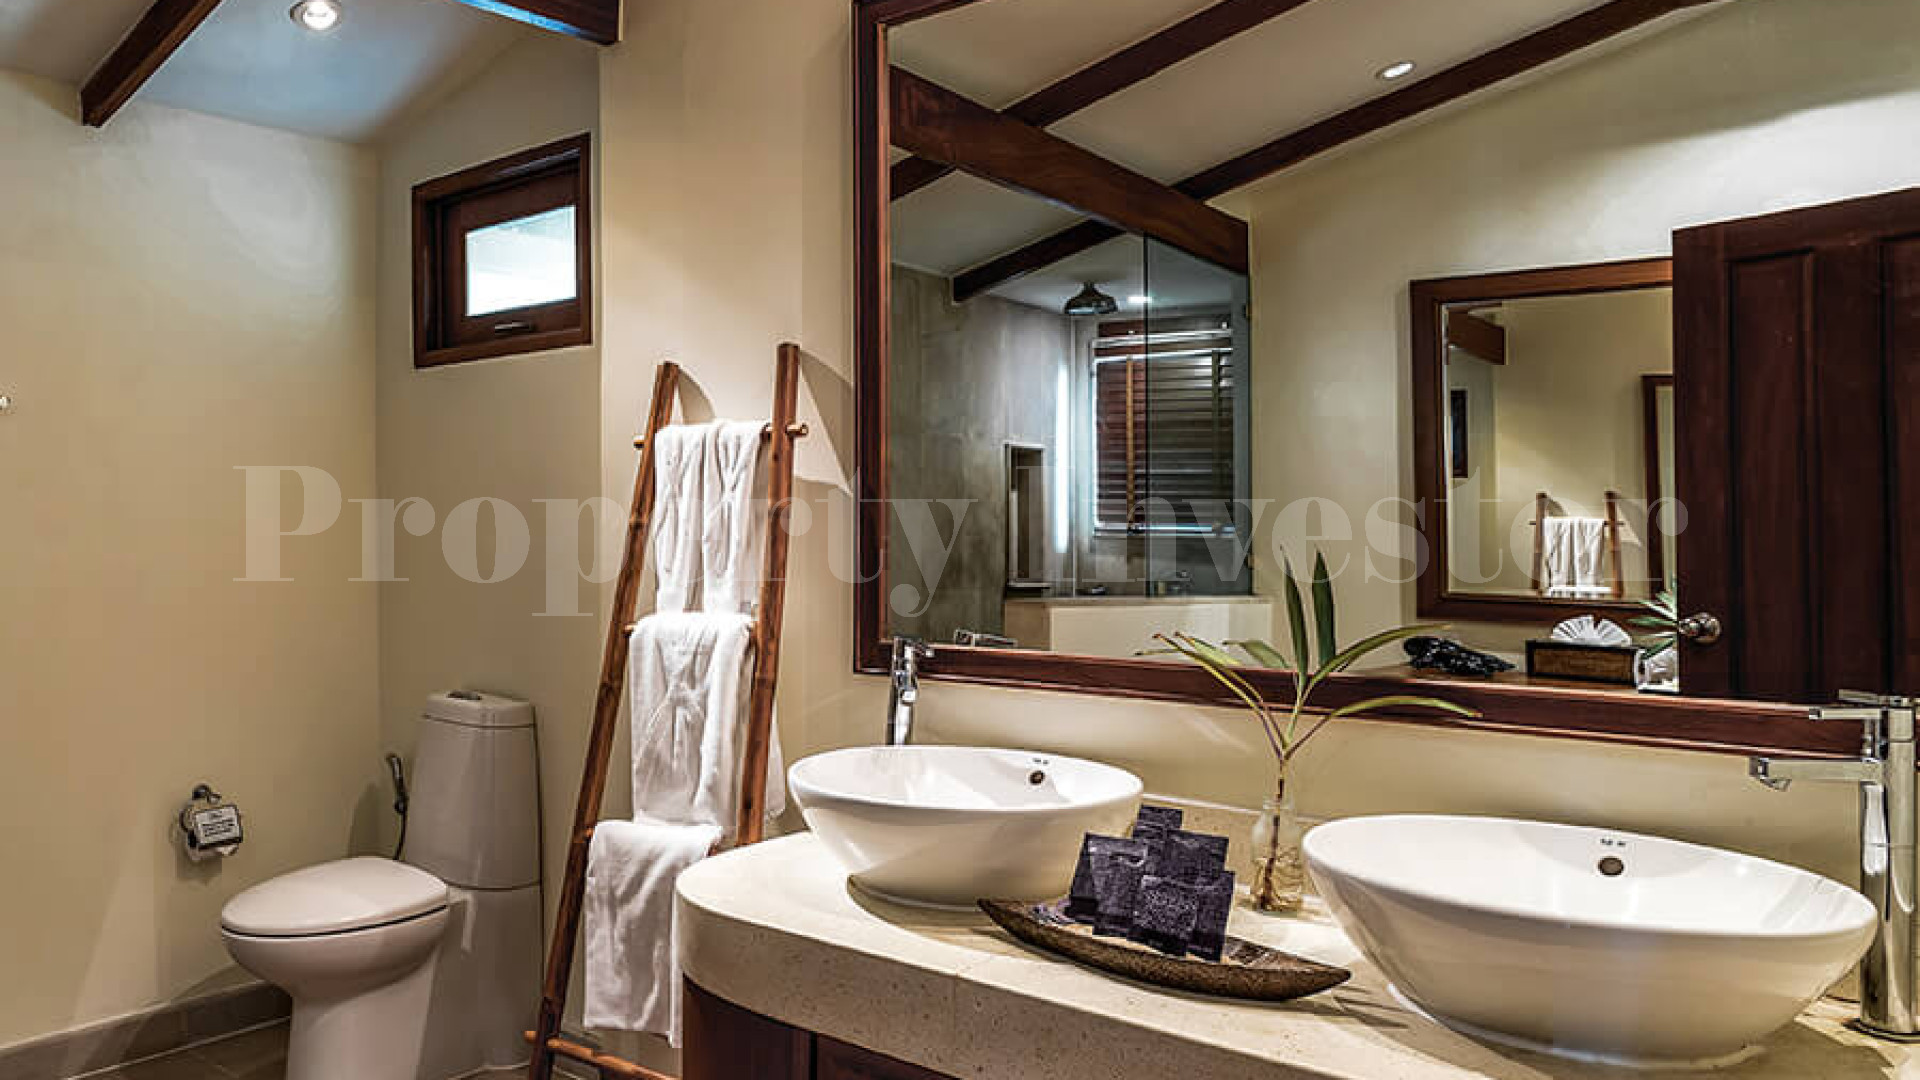 Popular 5* Star Luxury Eco Island Resort for Sale in Phuket | Property ...